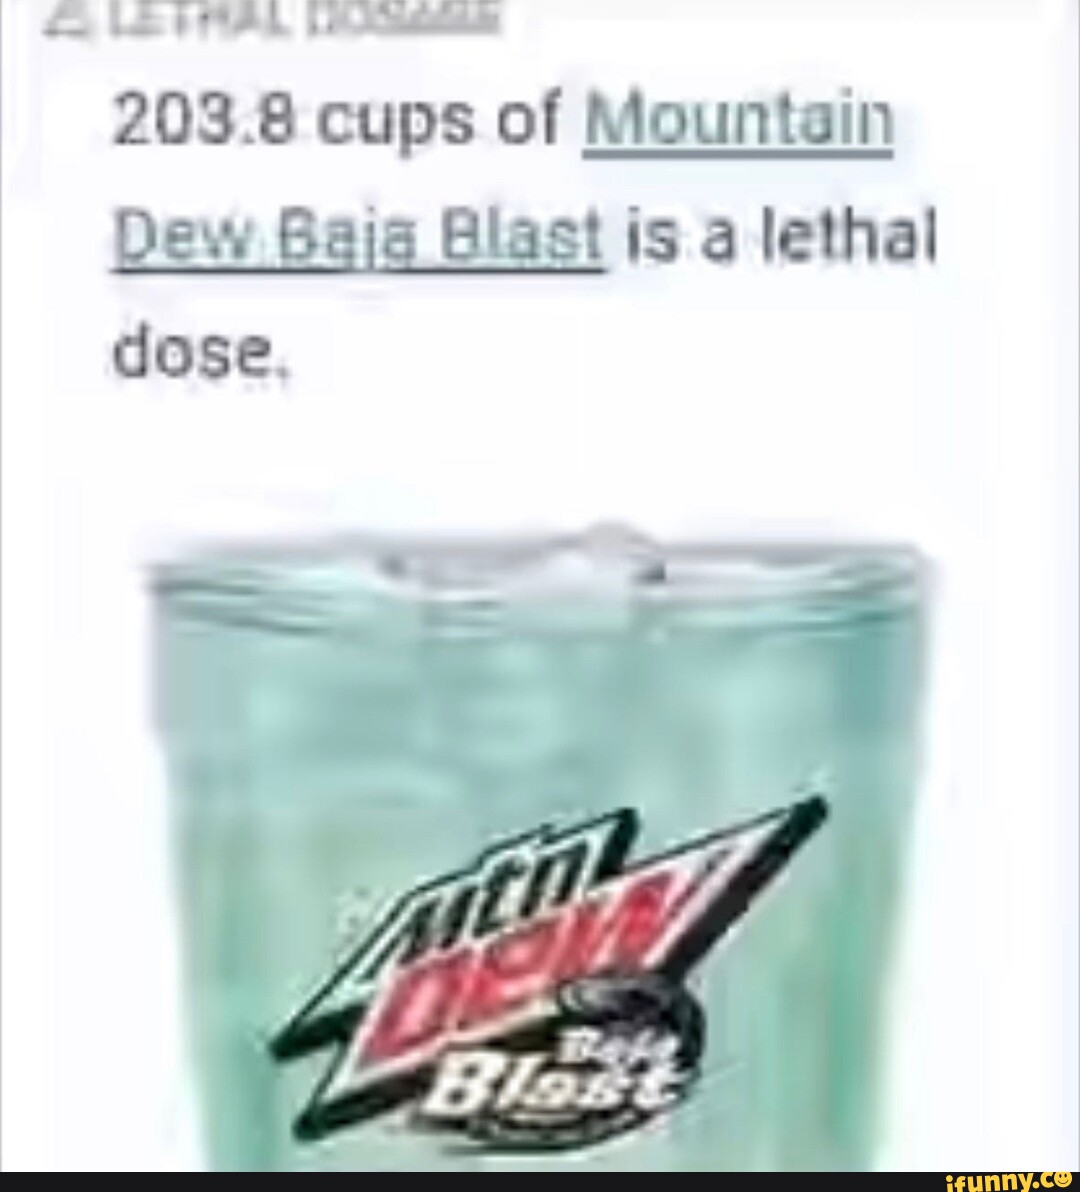 lethal dose of mountain dew baja blast